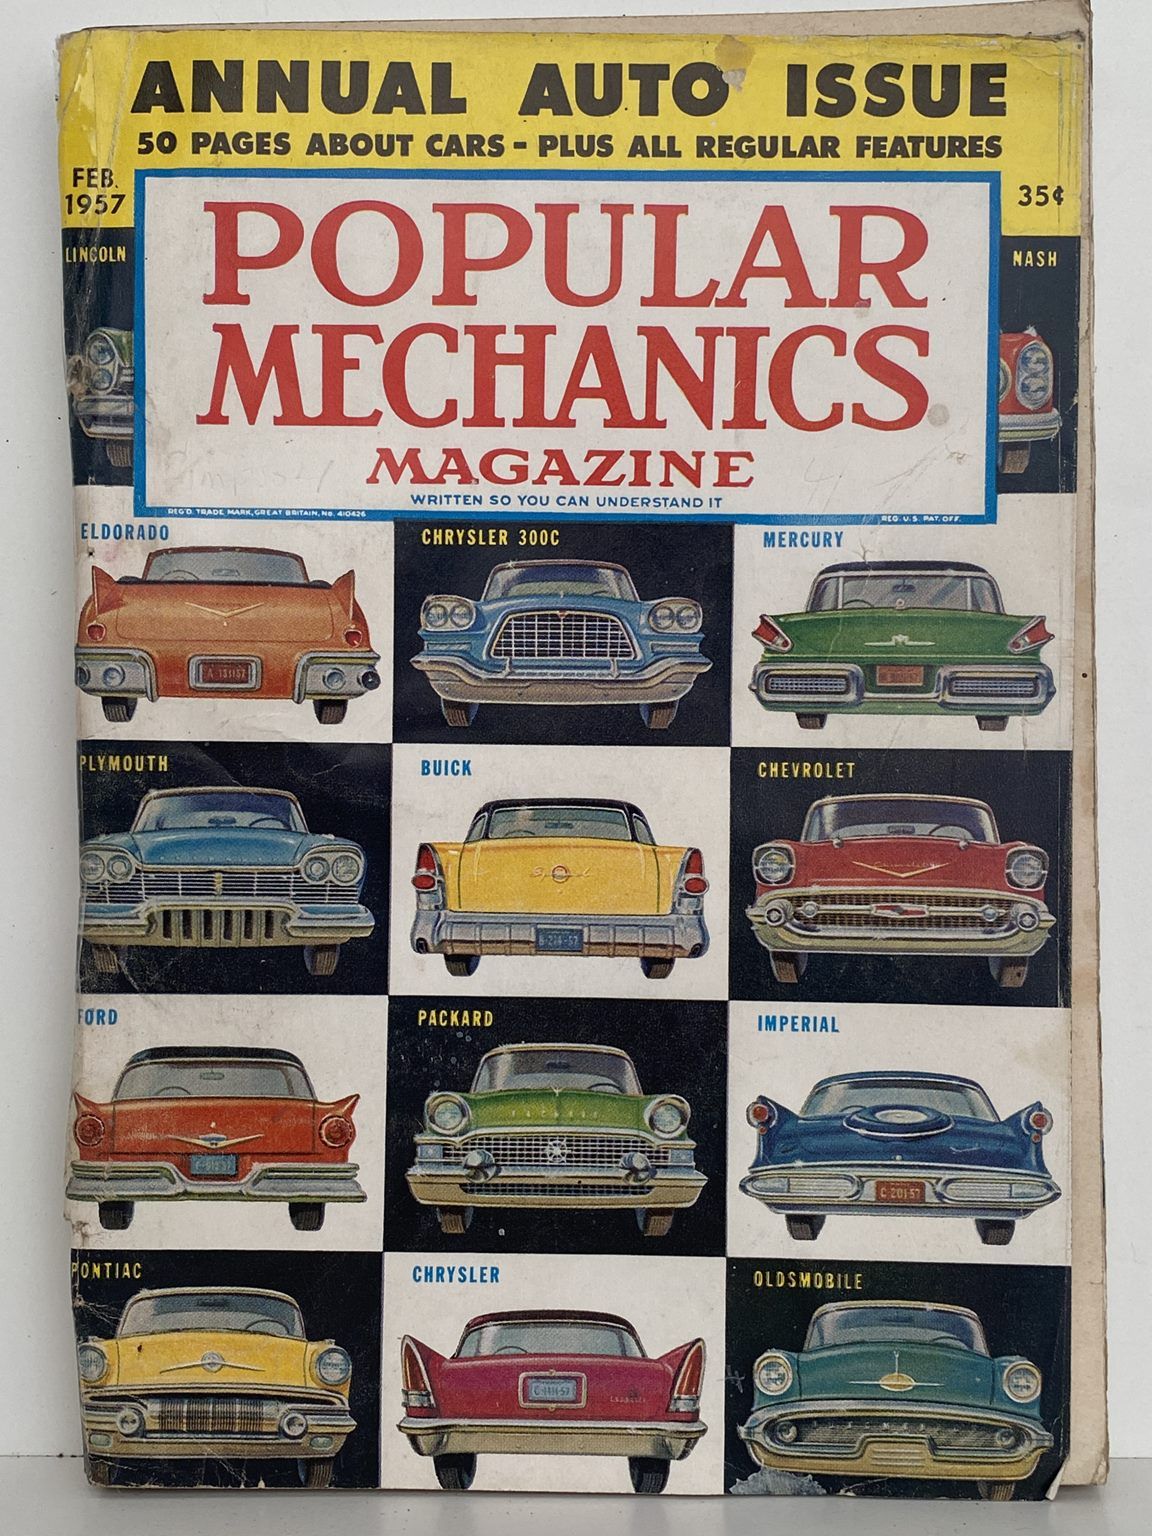 VINTAGE MAGAZINE: Popular Mechanics - Vol. 107, No. 2 - February 1957